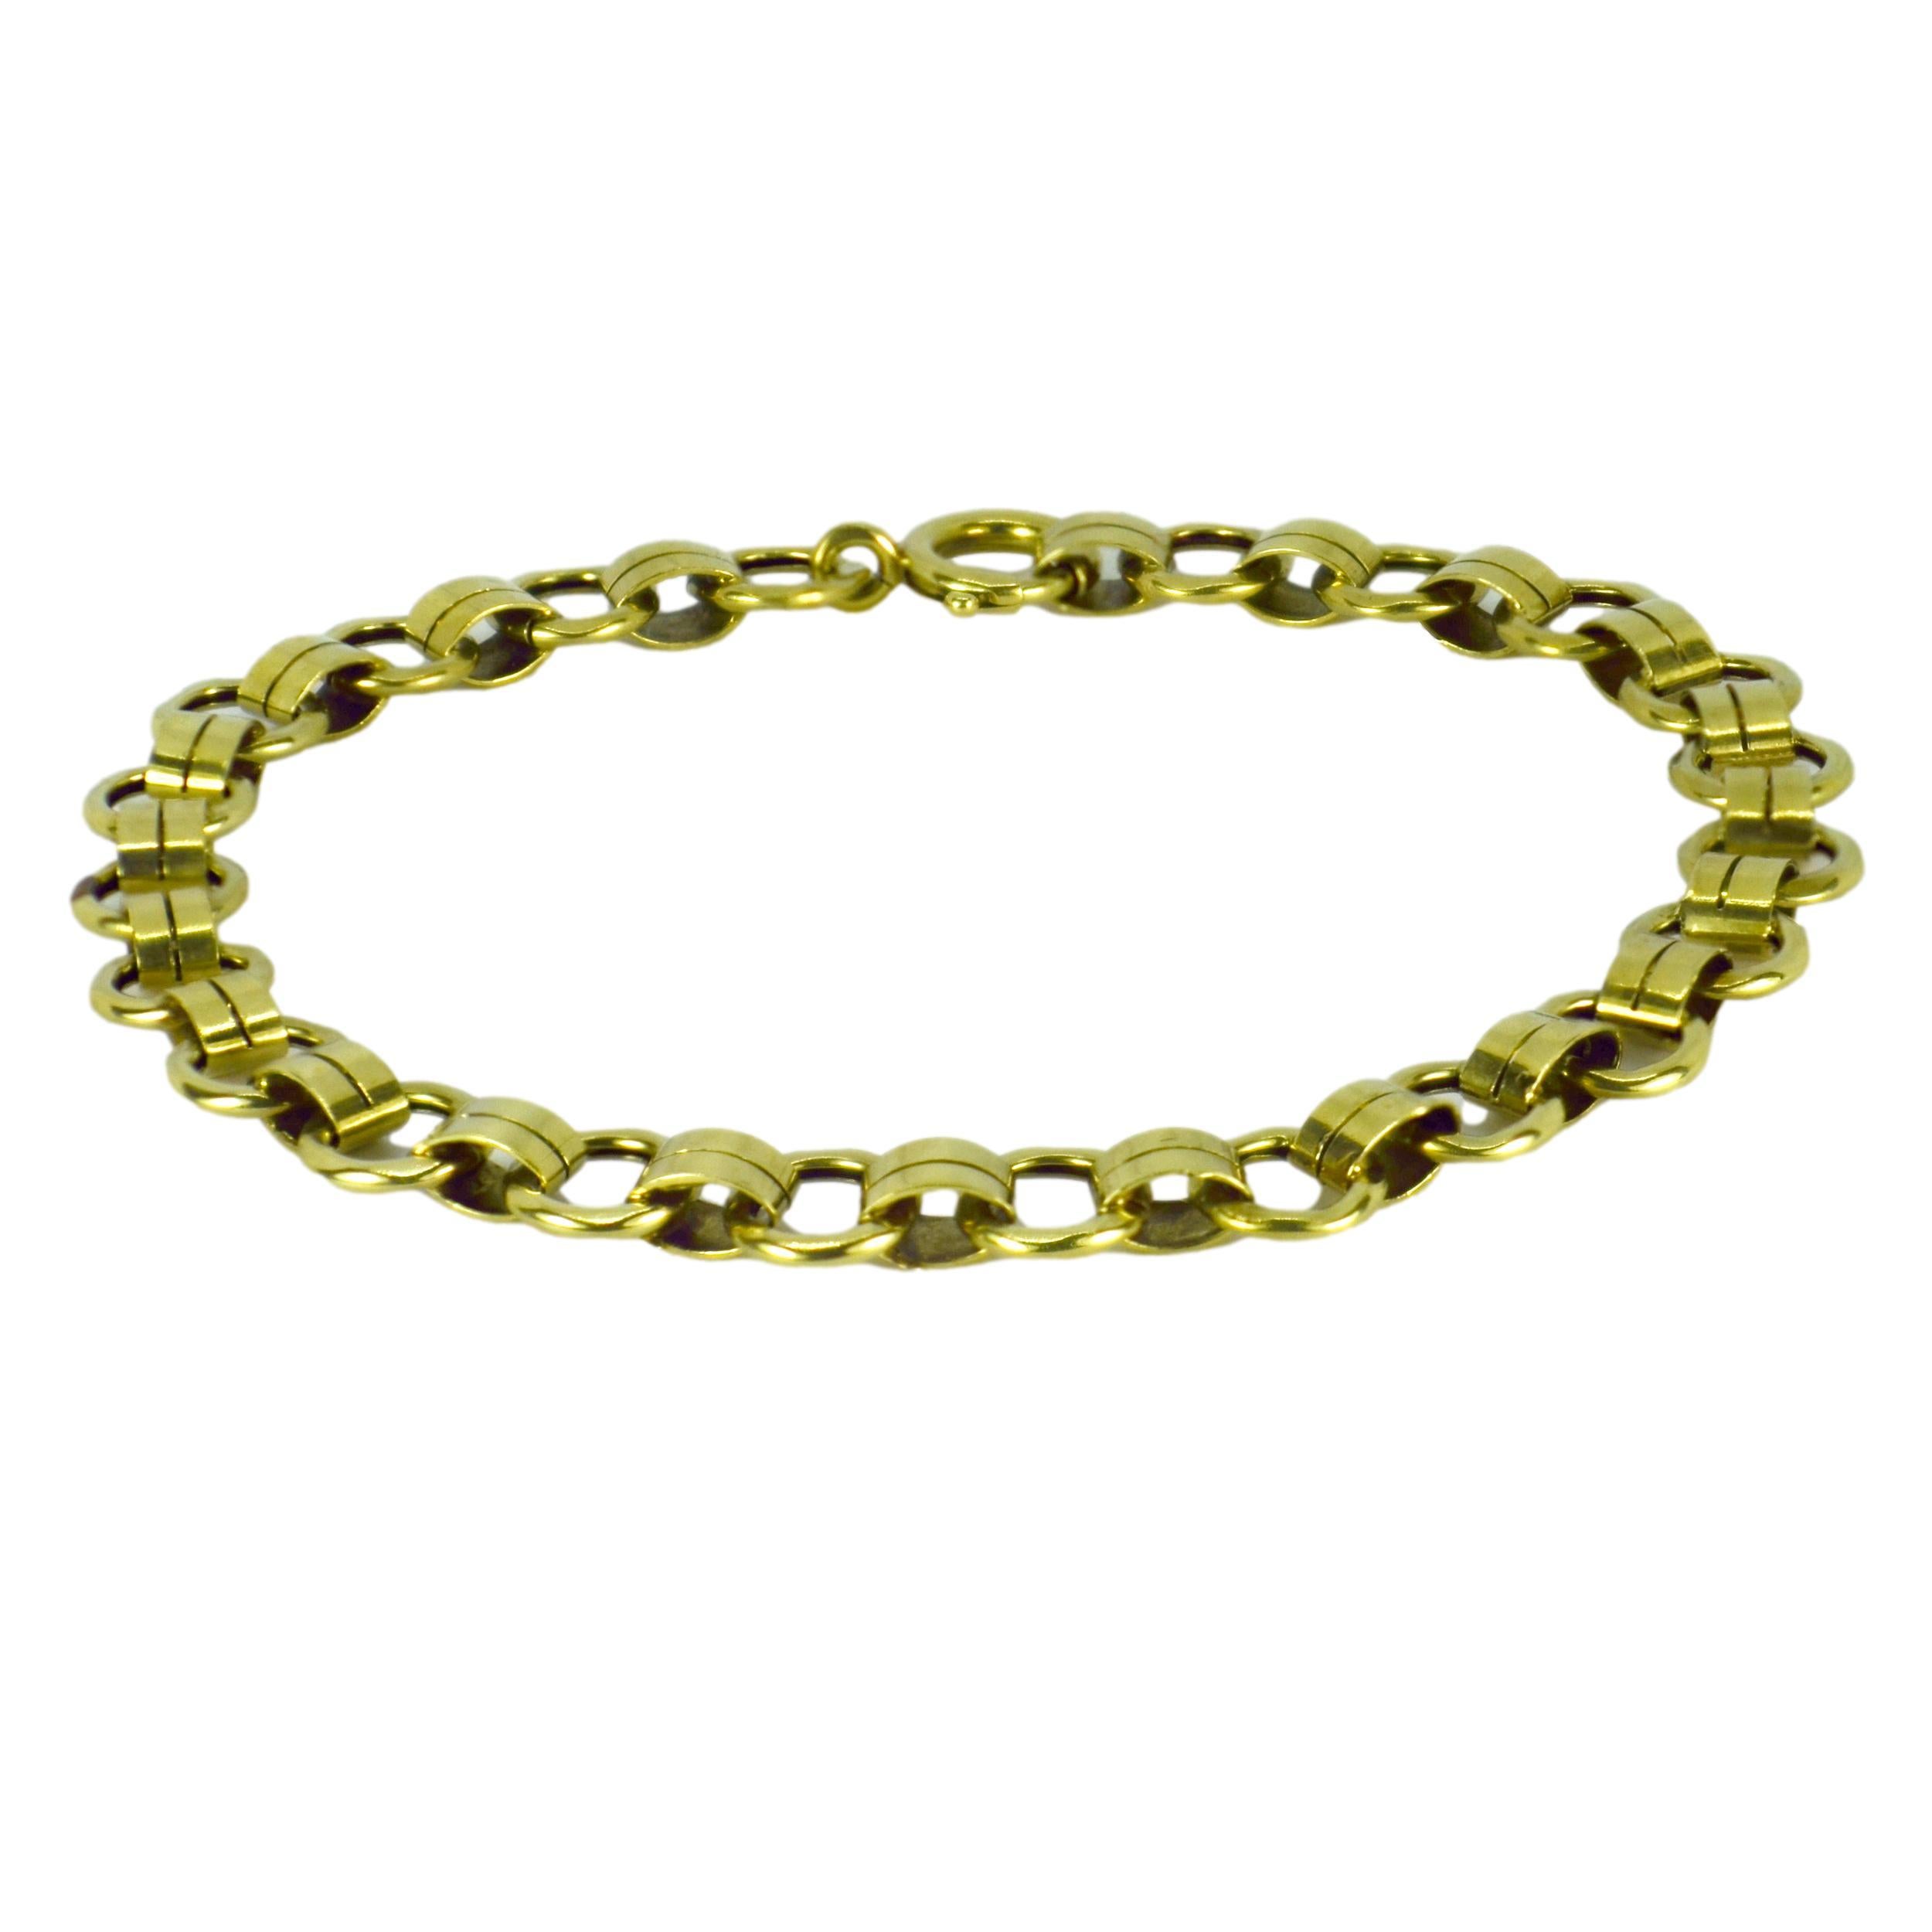 A 14 karat (14K) yellow gold link bracelet. Stamped 585 for 14 karat gold. 7” long.

Dimensions: 17.75 x 0.7 cm
Weight: 6.99 grams
